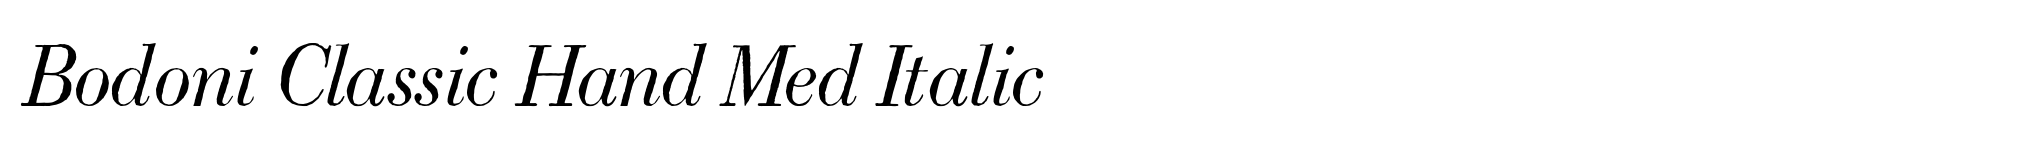 Bodoni Classic Hand Med Italic image